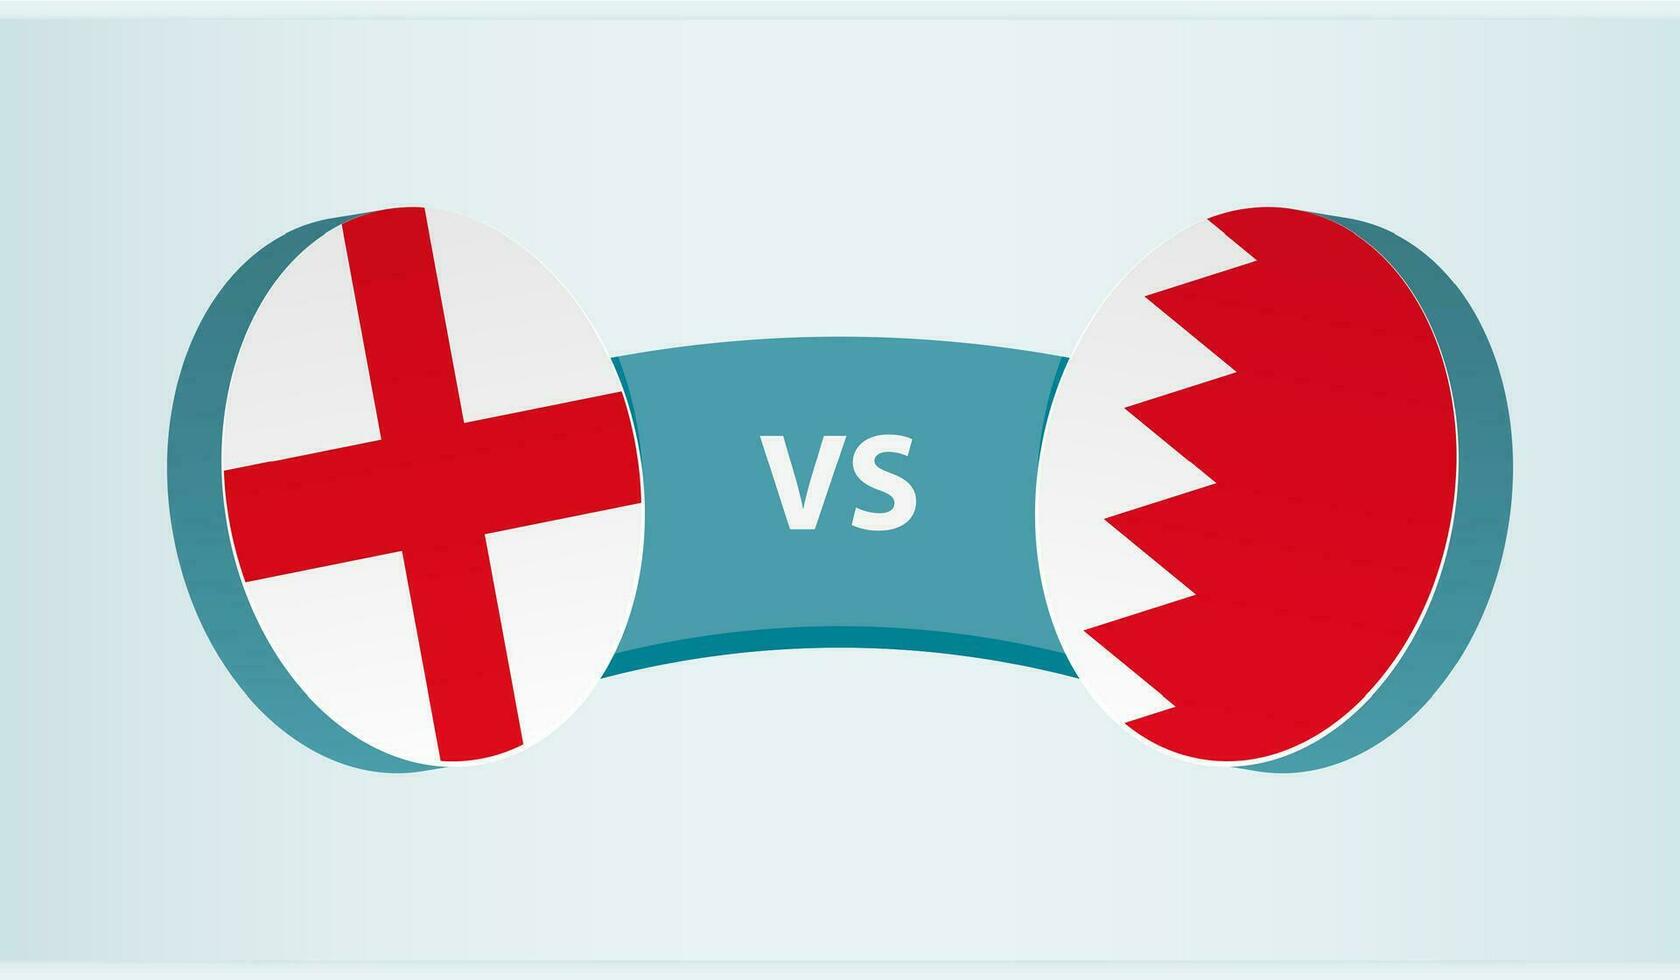 England versus Bahrain, team sports competition concept. vector